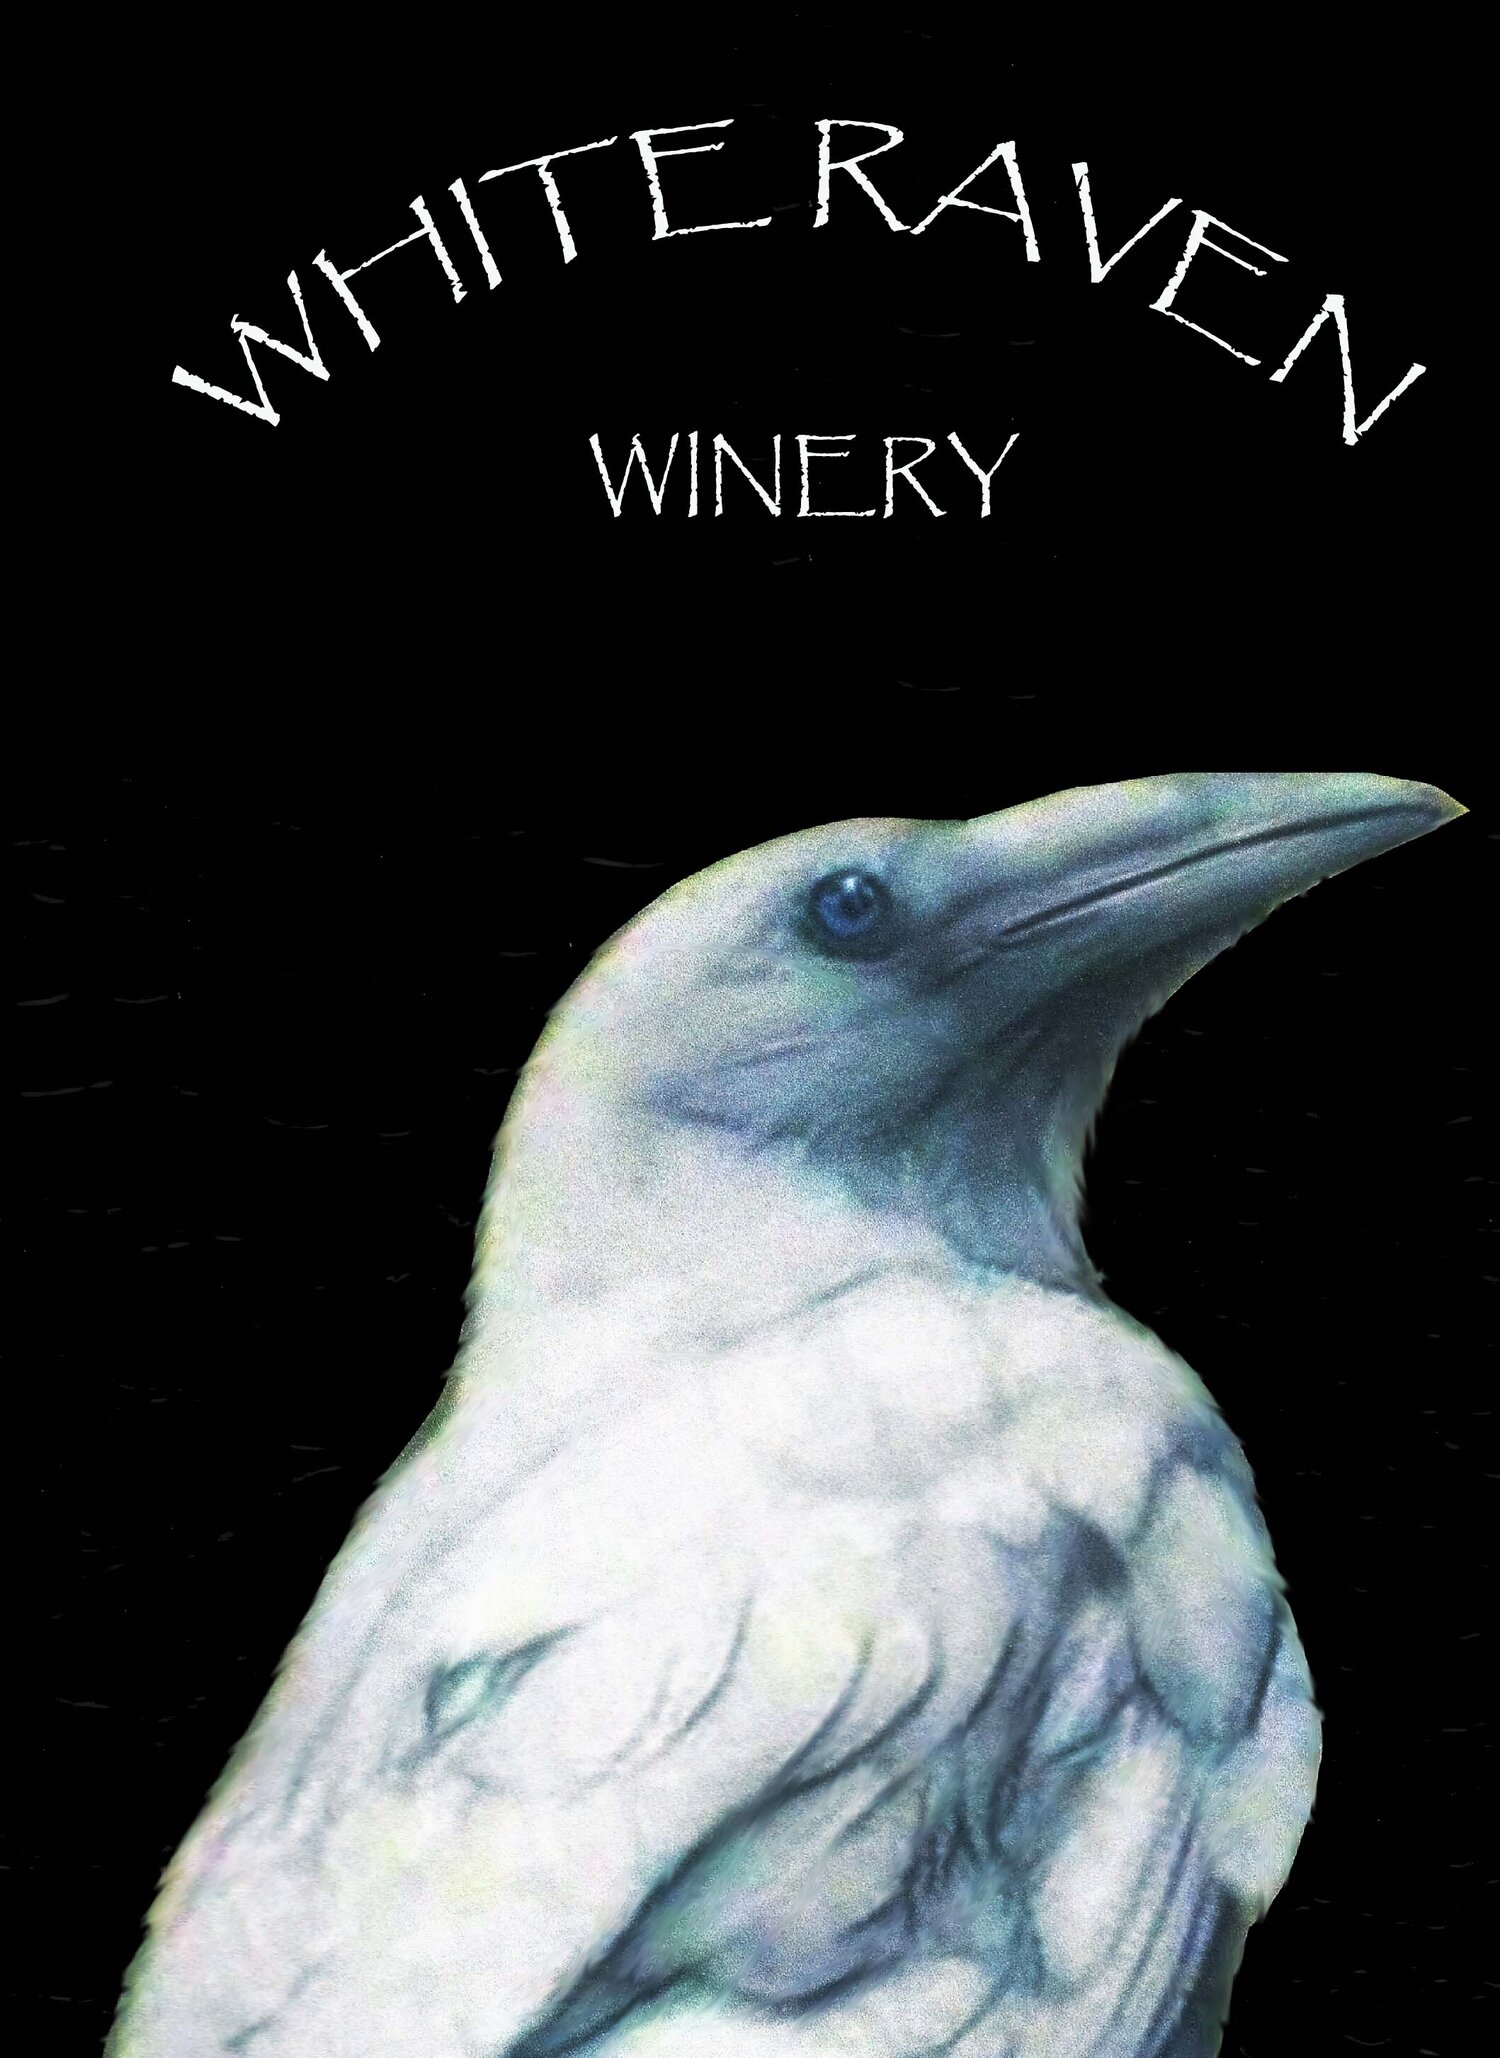 White Raven WInery